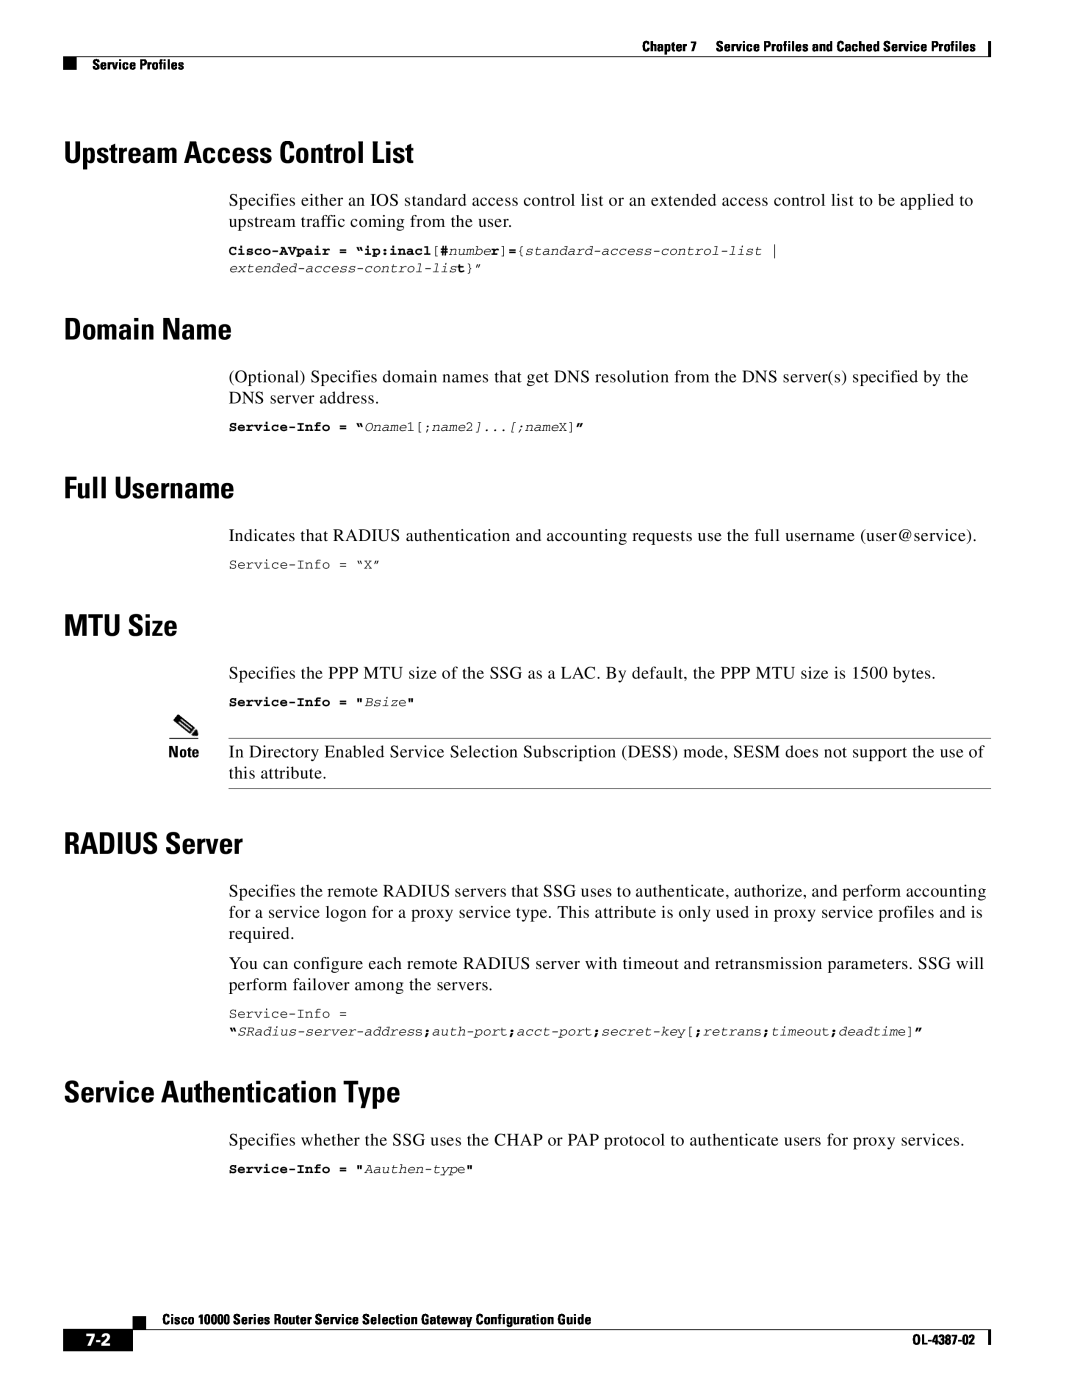 Cisco Systems OL-4387-02 manual Upstream Access Control List, Domain Name, Full Username, MTU Size, RADIUS Server 